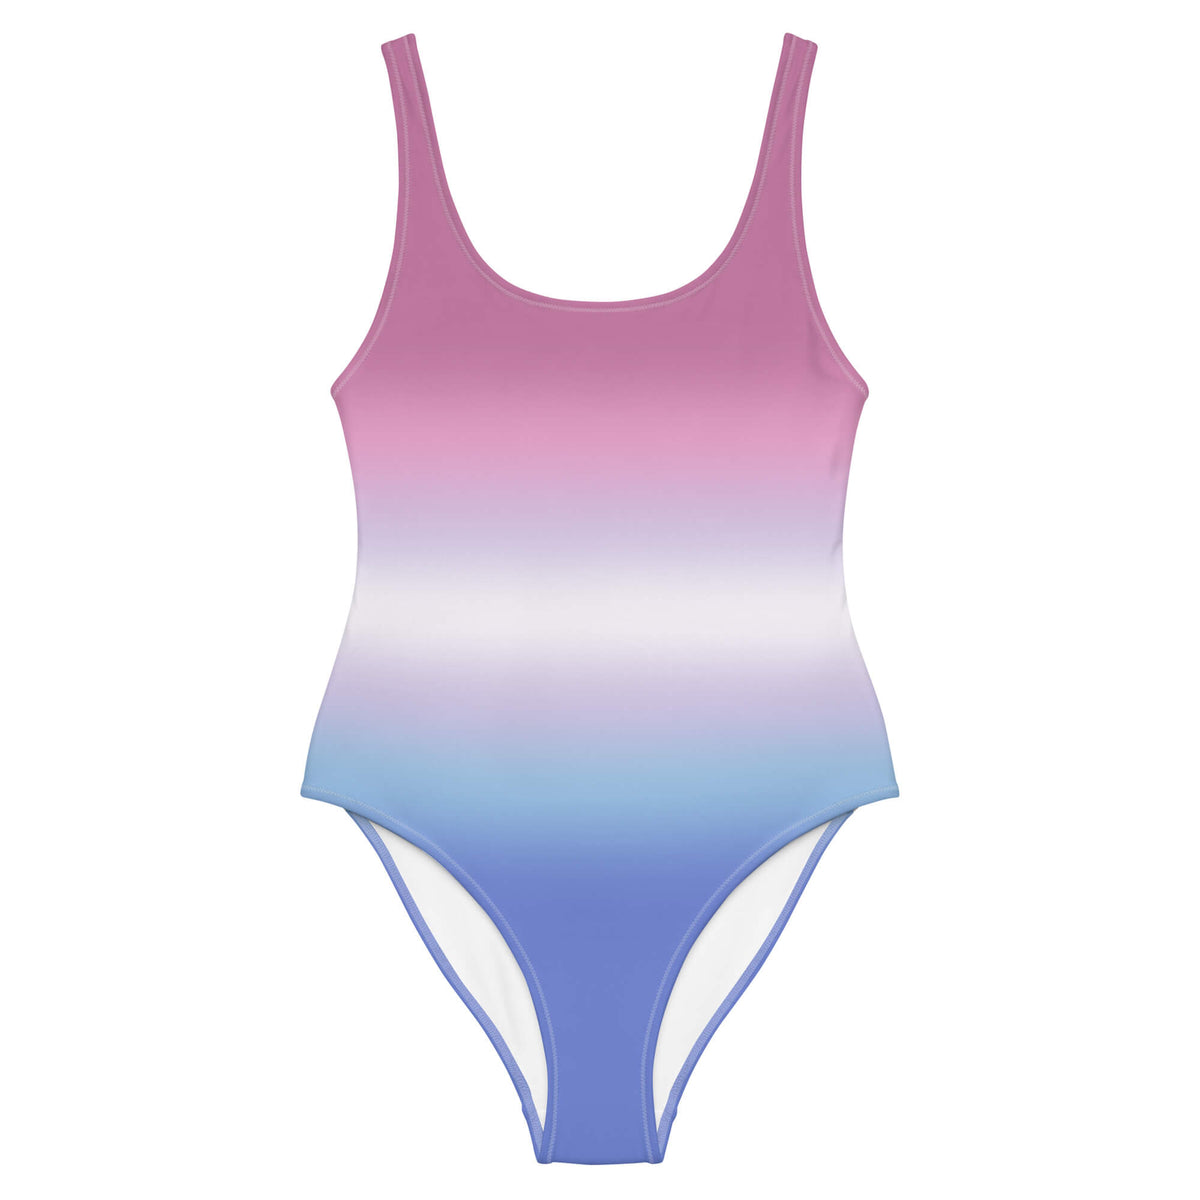 Bigender Pride Ombre Open-back Swimsuit